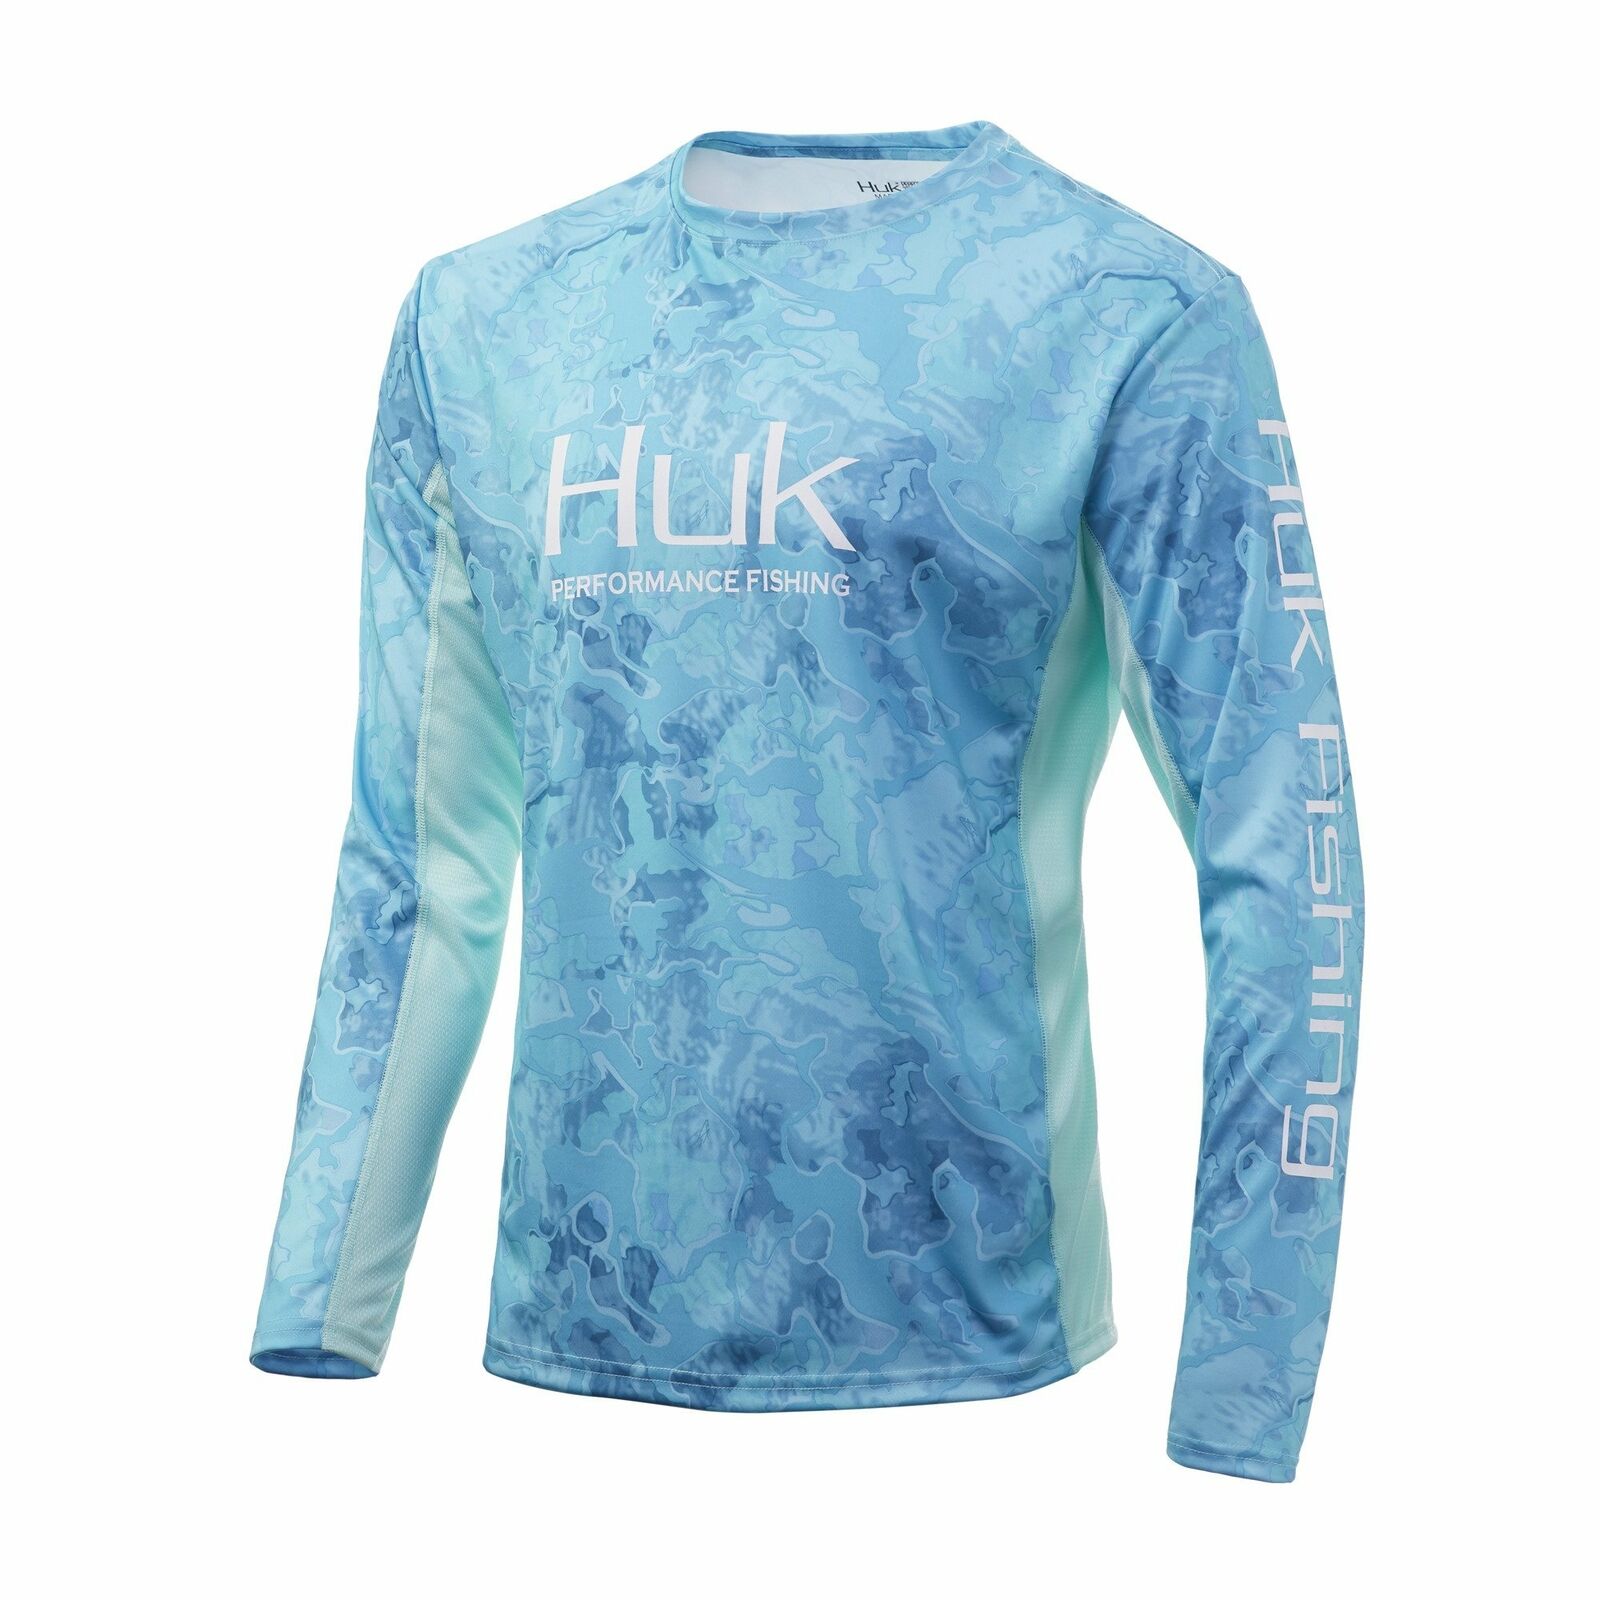 Huk Men's Kryptek Icon X Long Sleeve Performance Shirt